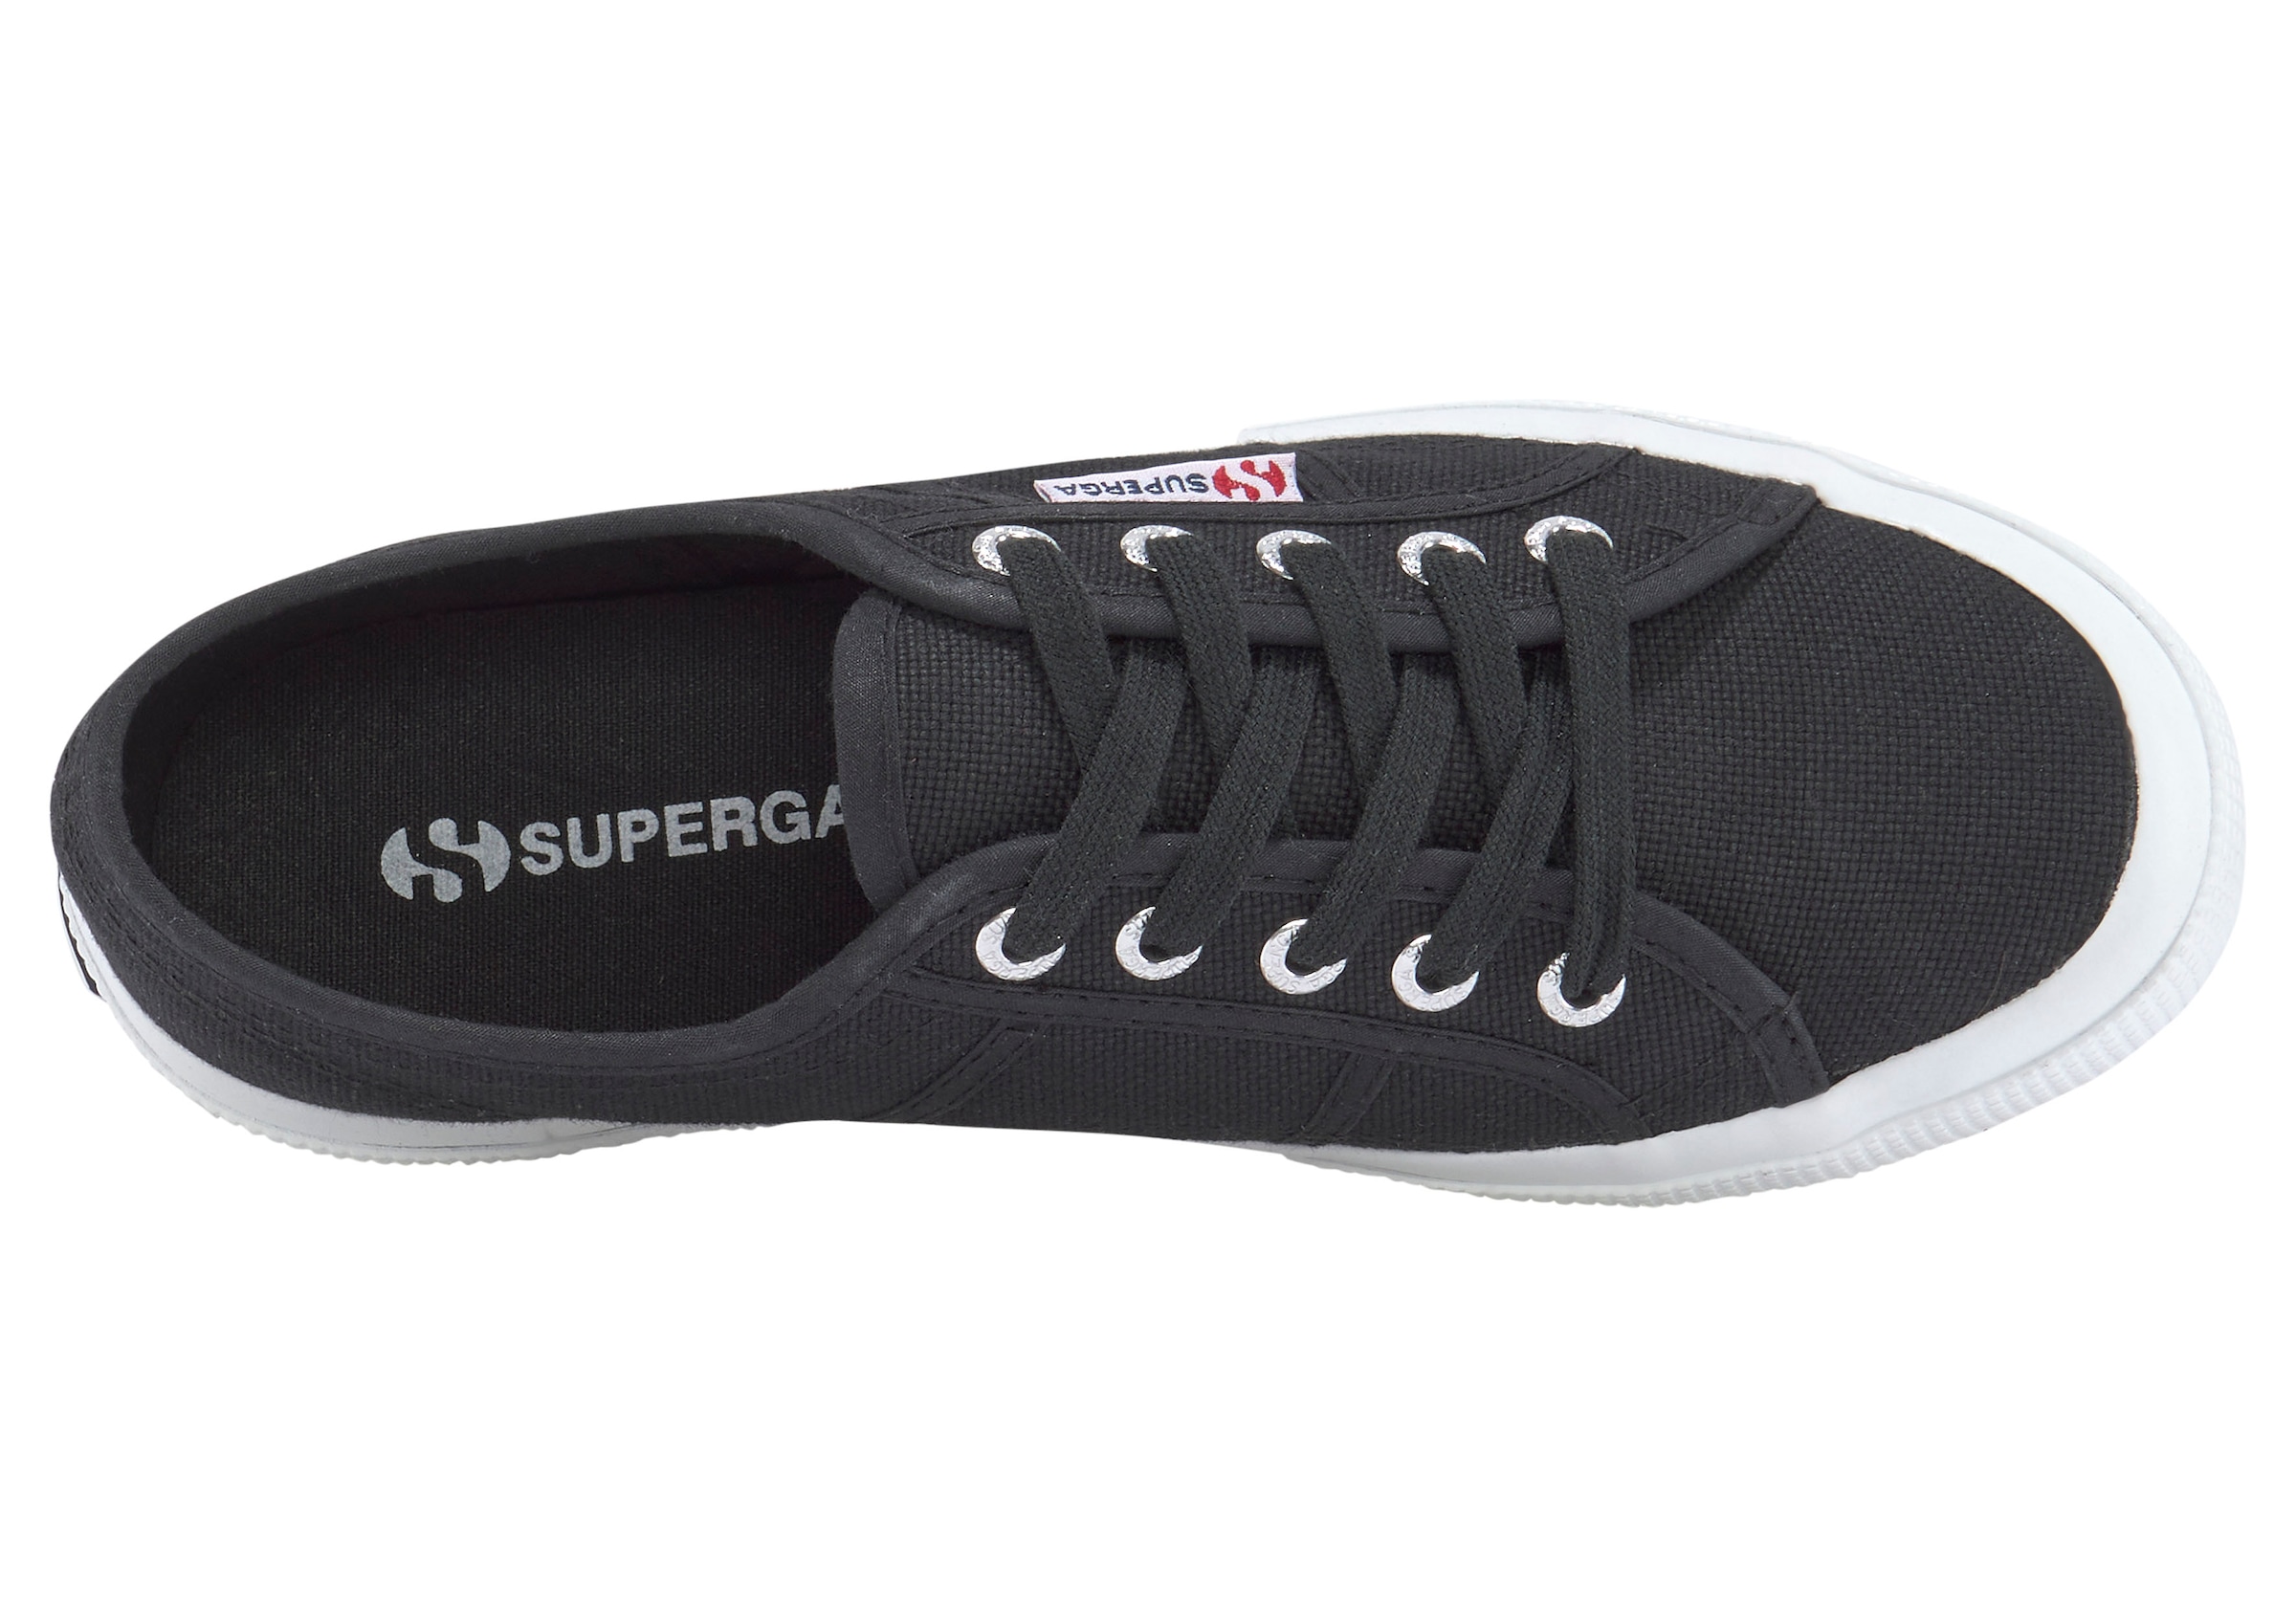 Superga Sneaker »Cotu Classic«, mit klassischem Canvas-Obermaterial